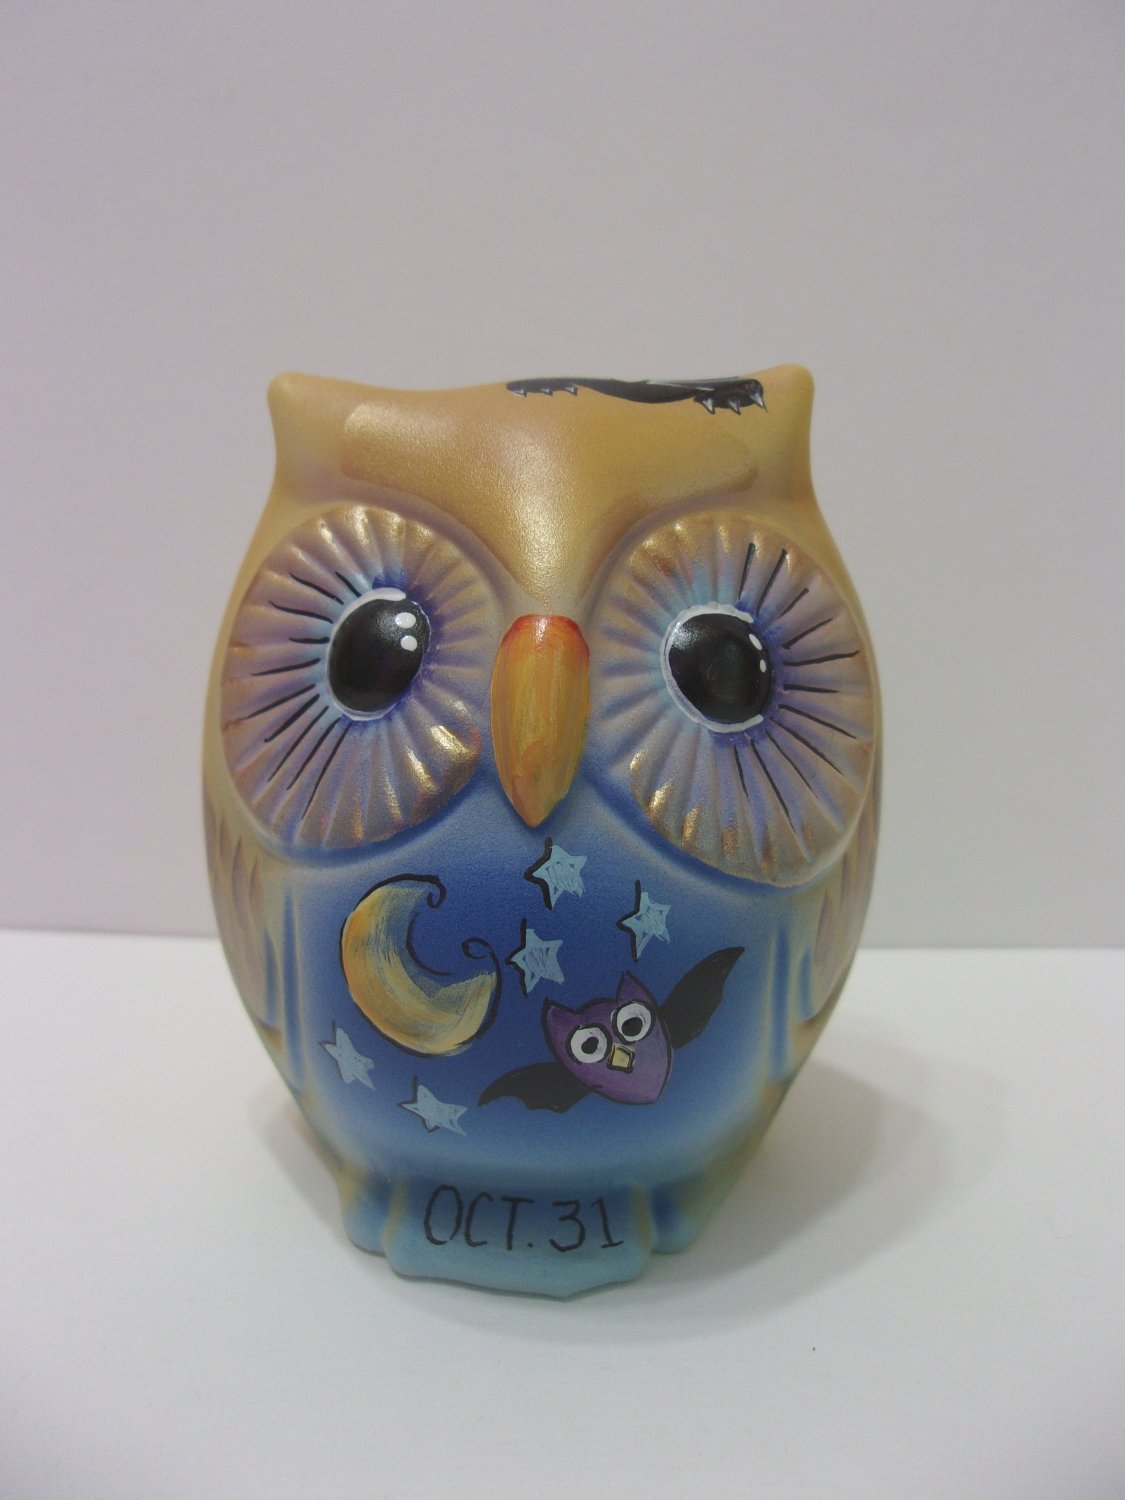 Fenton Glass October 31 Halloween Owl Figurine w Black Cat Ltd Ed #6/39 K Barley